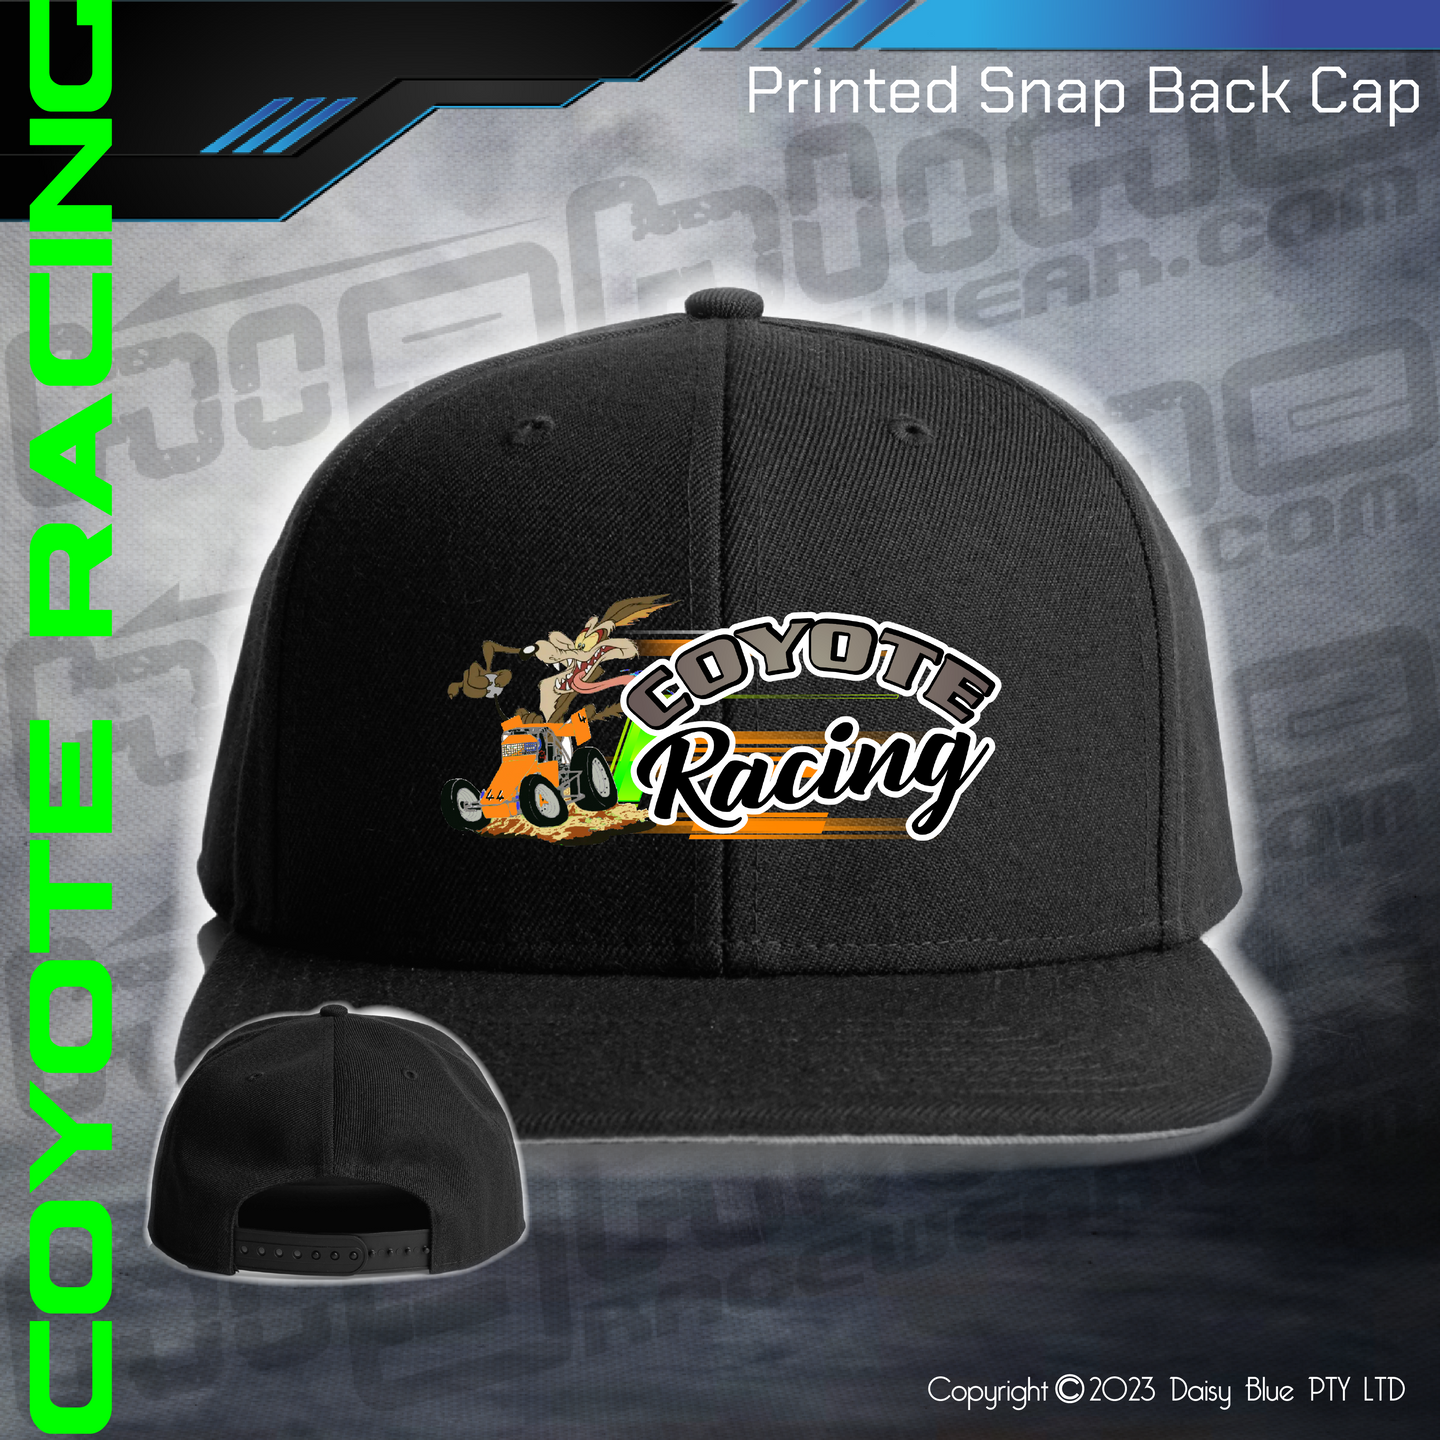 Printed Snap Back CAP - Coyote Racing